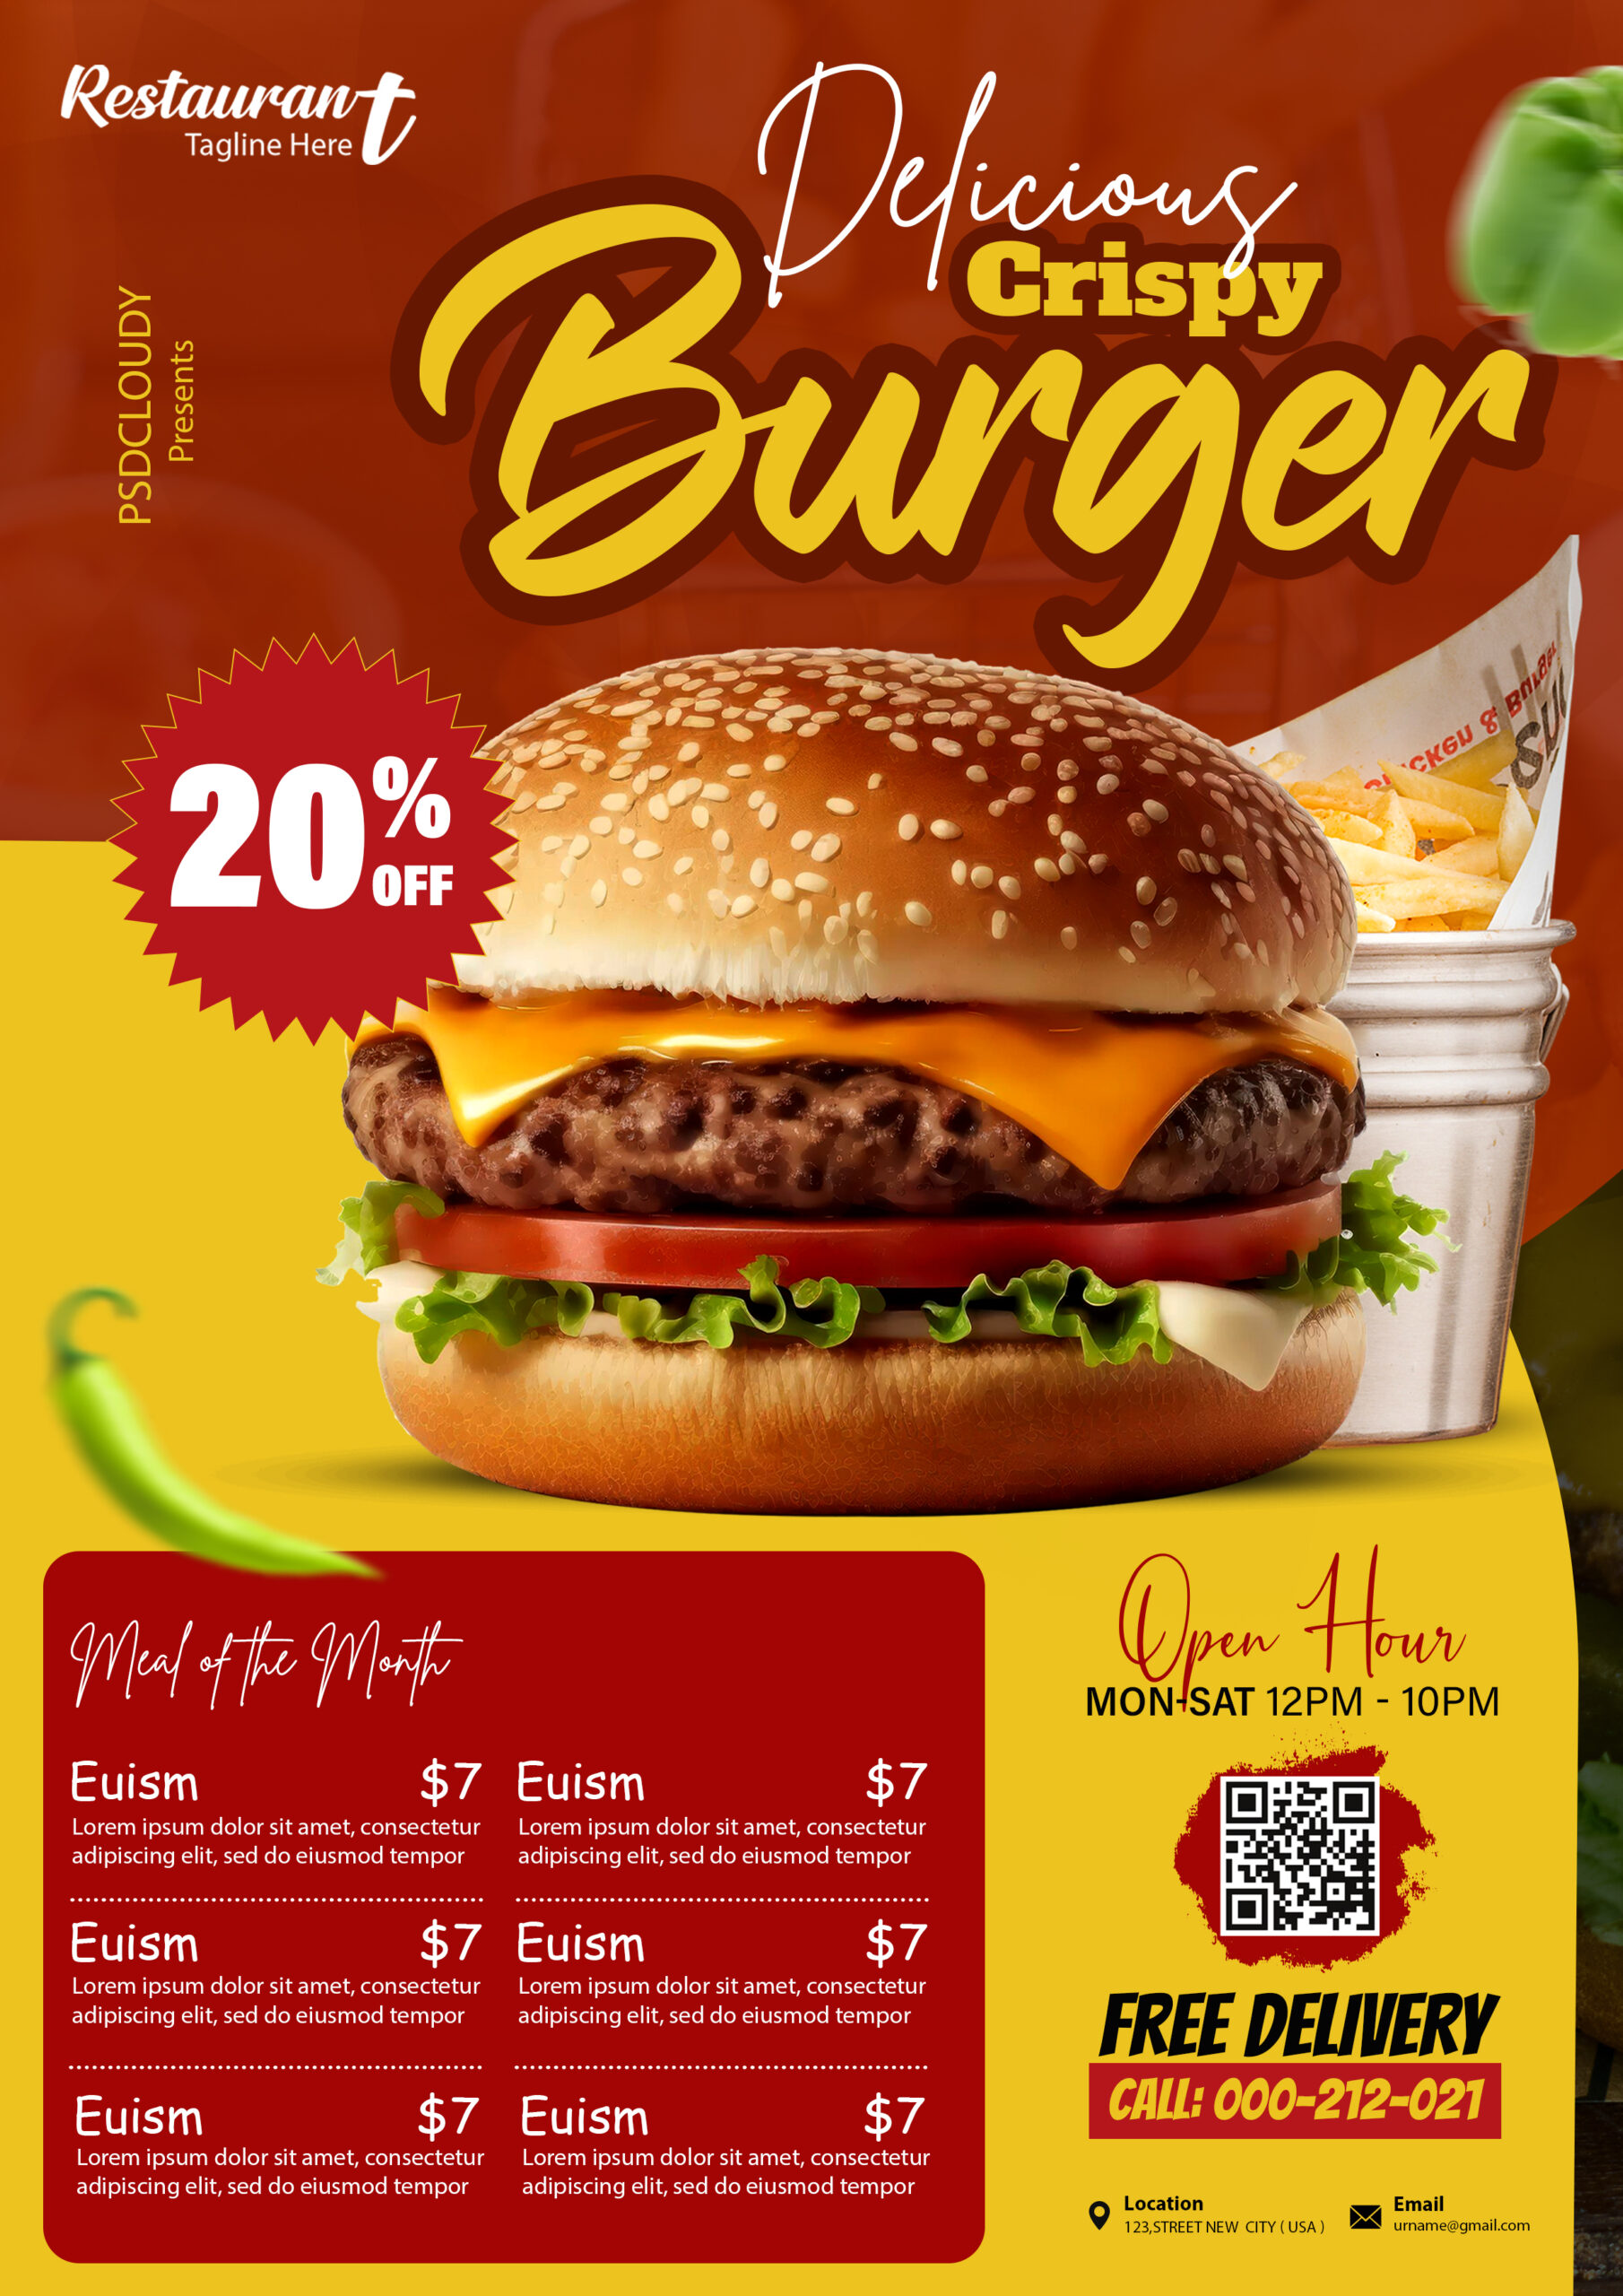 Delicious Crispy Burger and Food Menu Flyer Free PSD Download